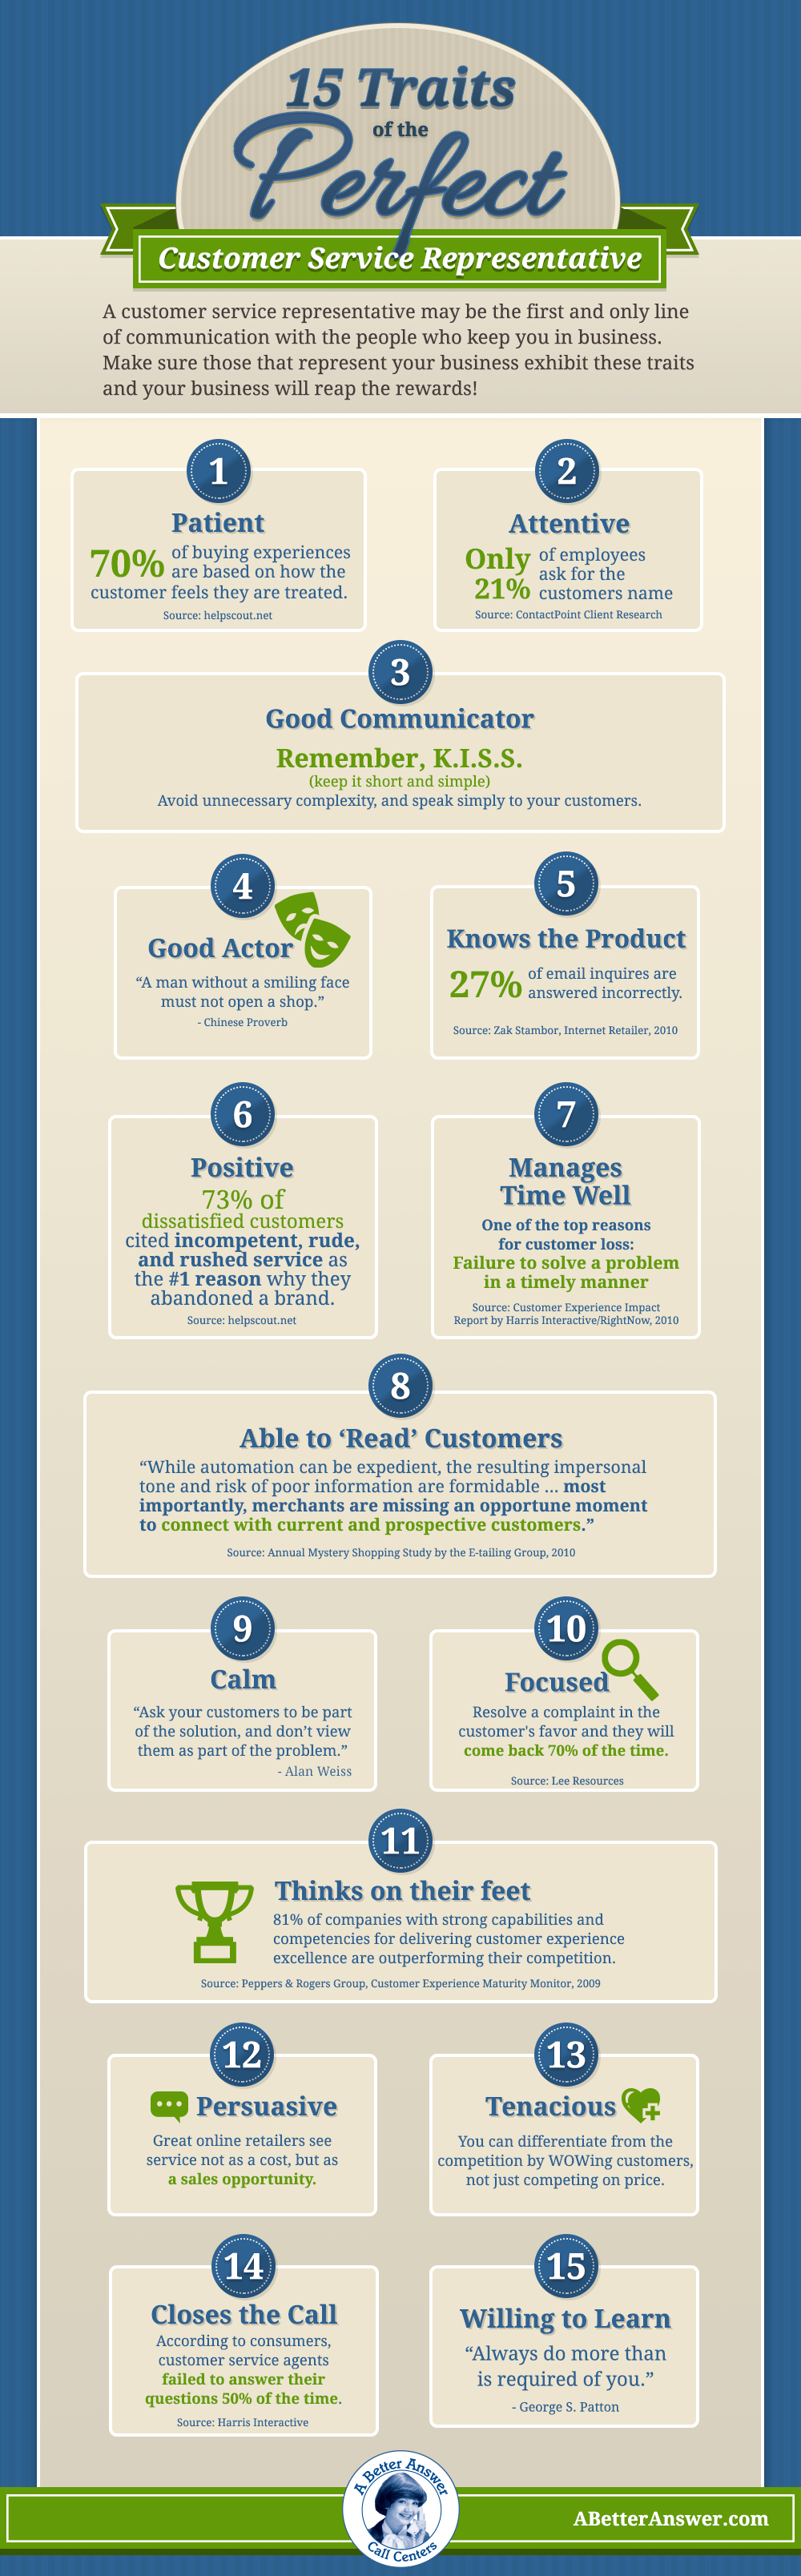 15 Traits of the Perfect Customer Service Representative